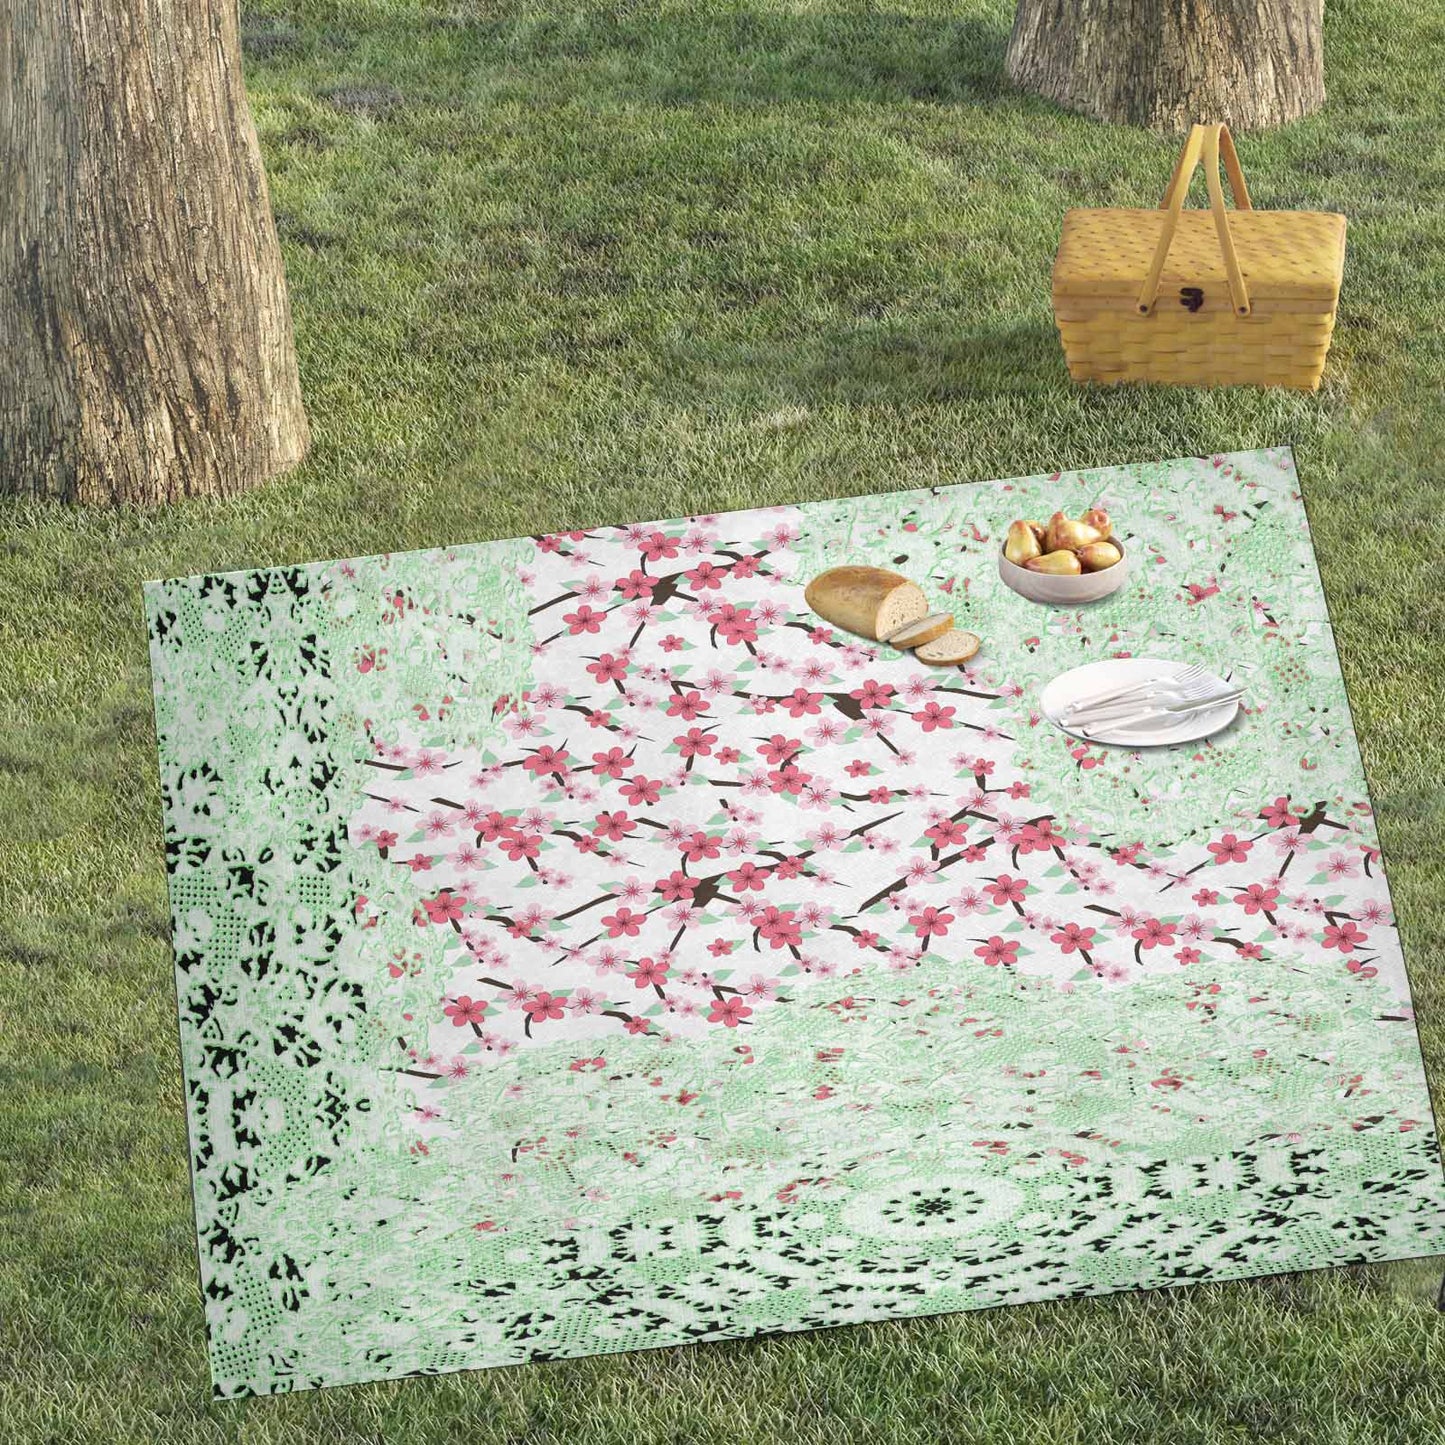 Victorian lace print waterproof picnic mat, 69 x 55in, design 10